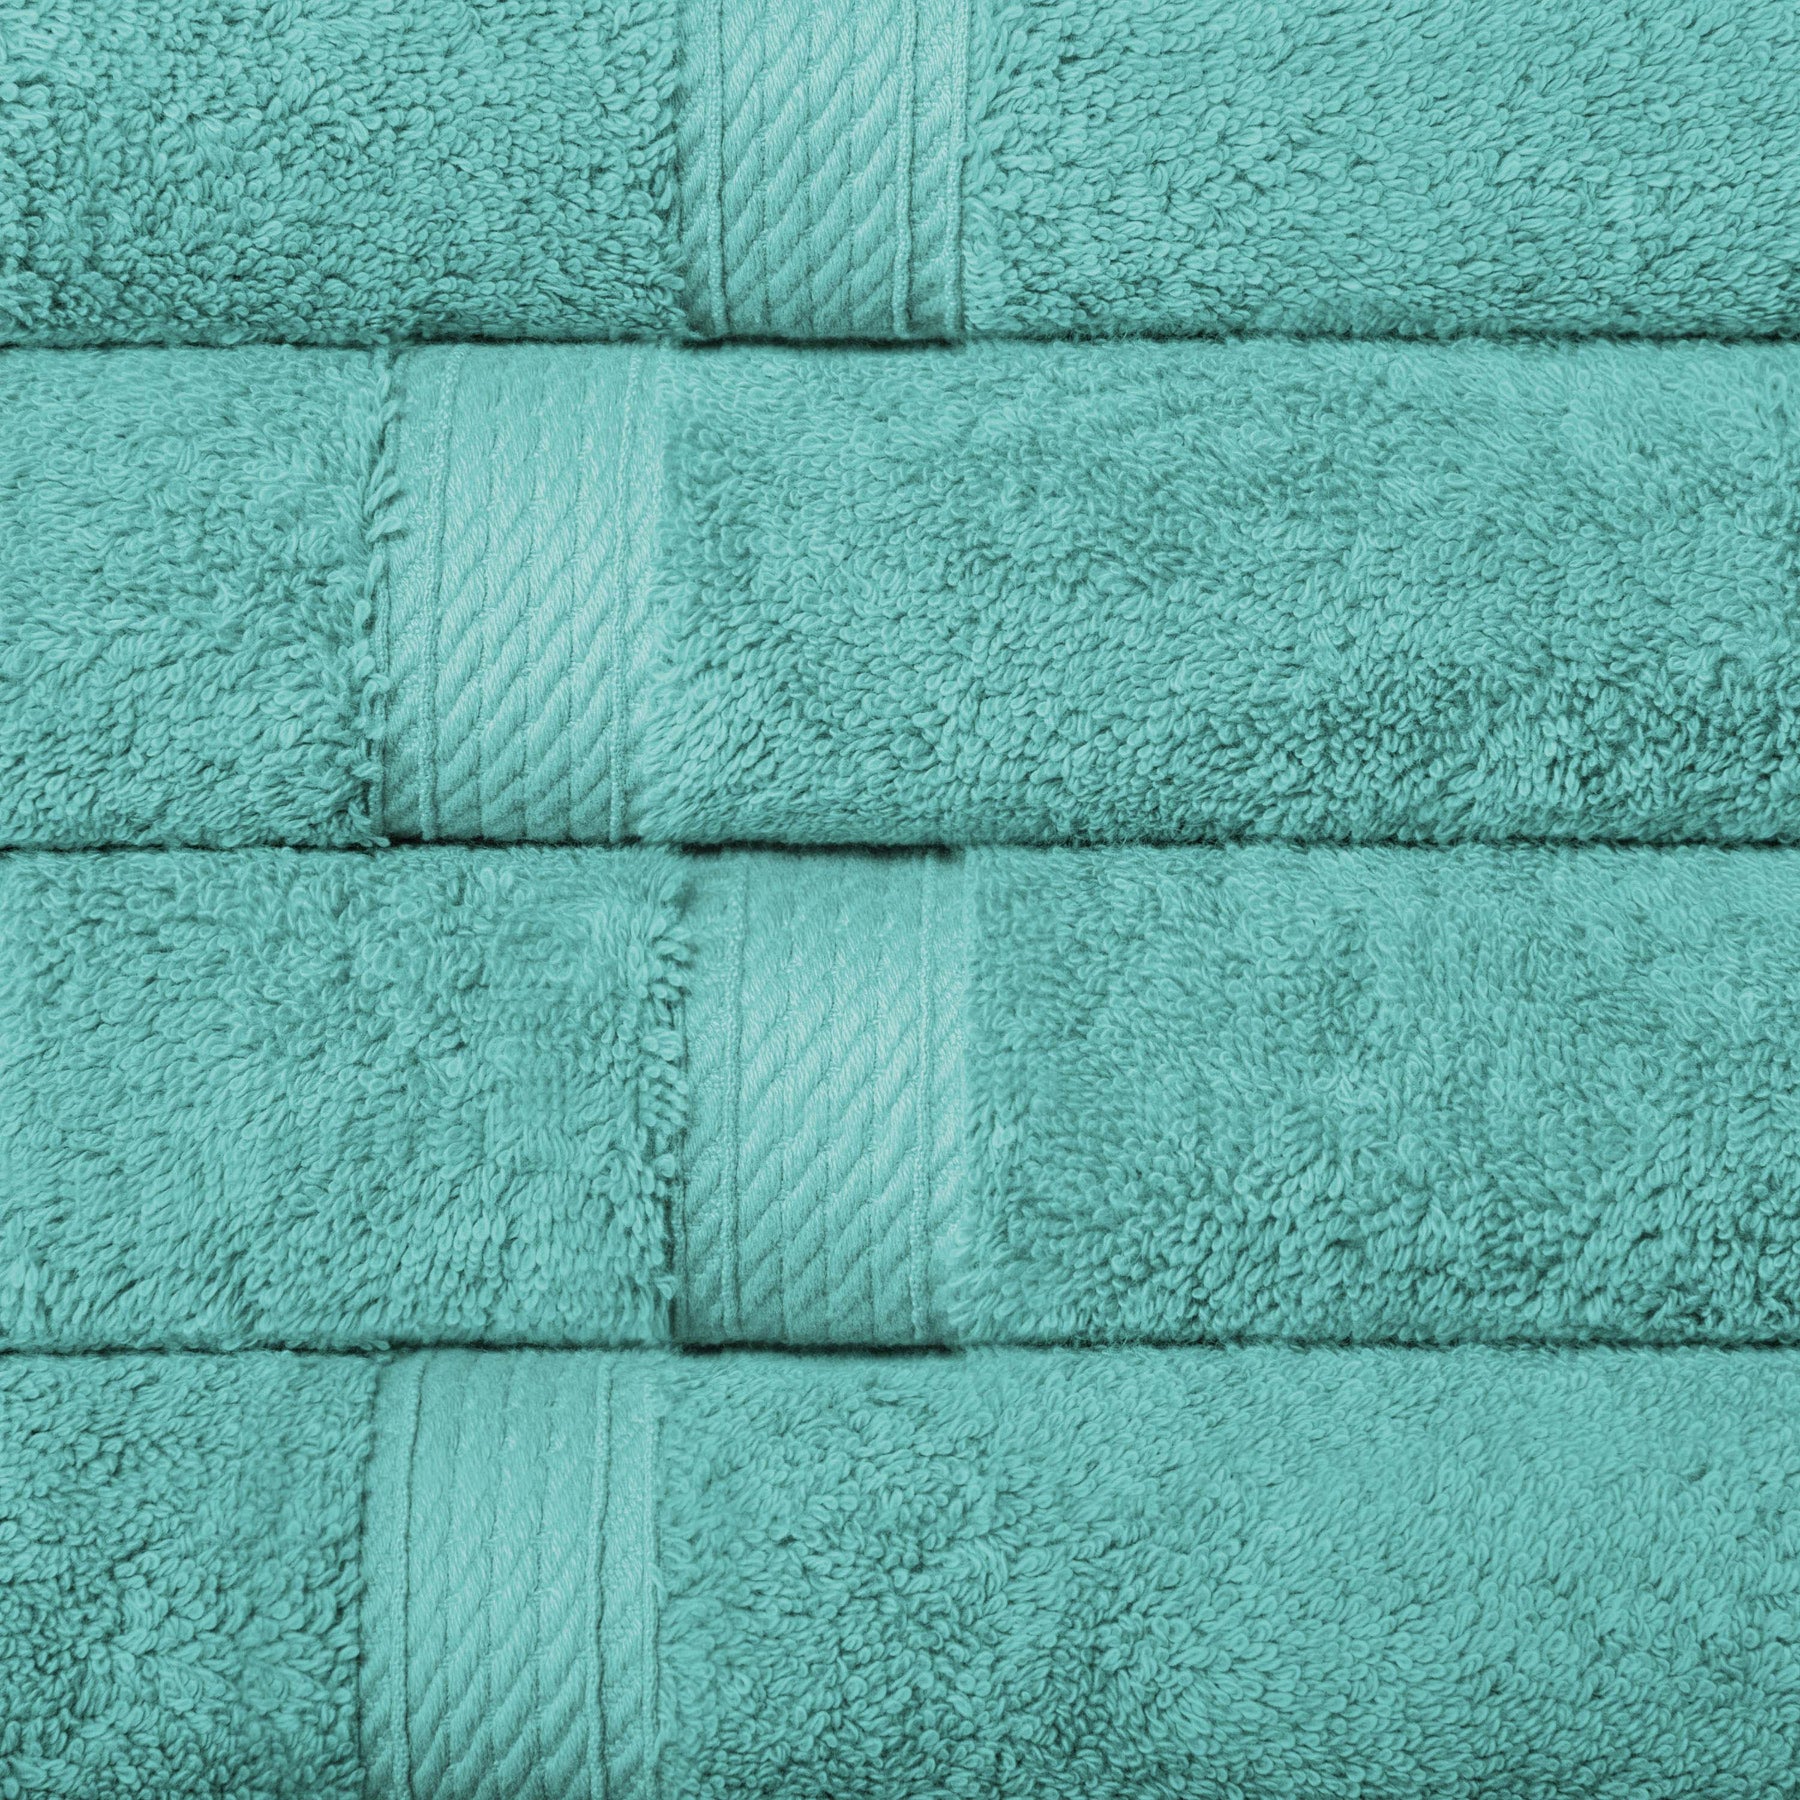 Superior Egyptian Cotton Plush Heavyweight Absorbent Luxury Soft 9-Piece Towel Set - Turquoise